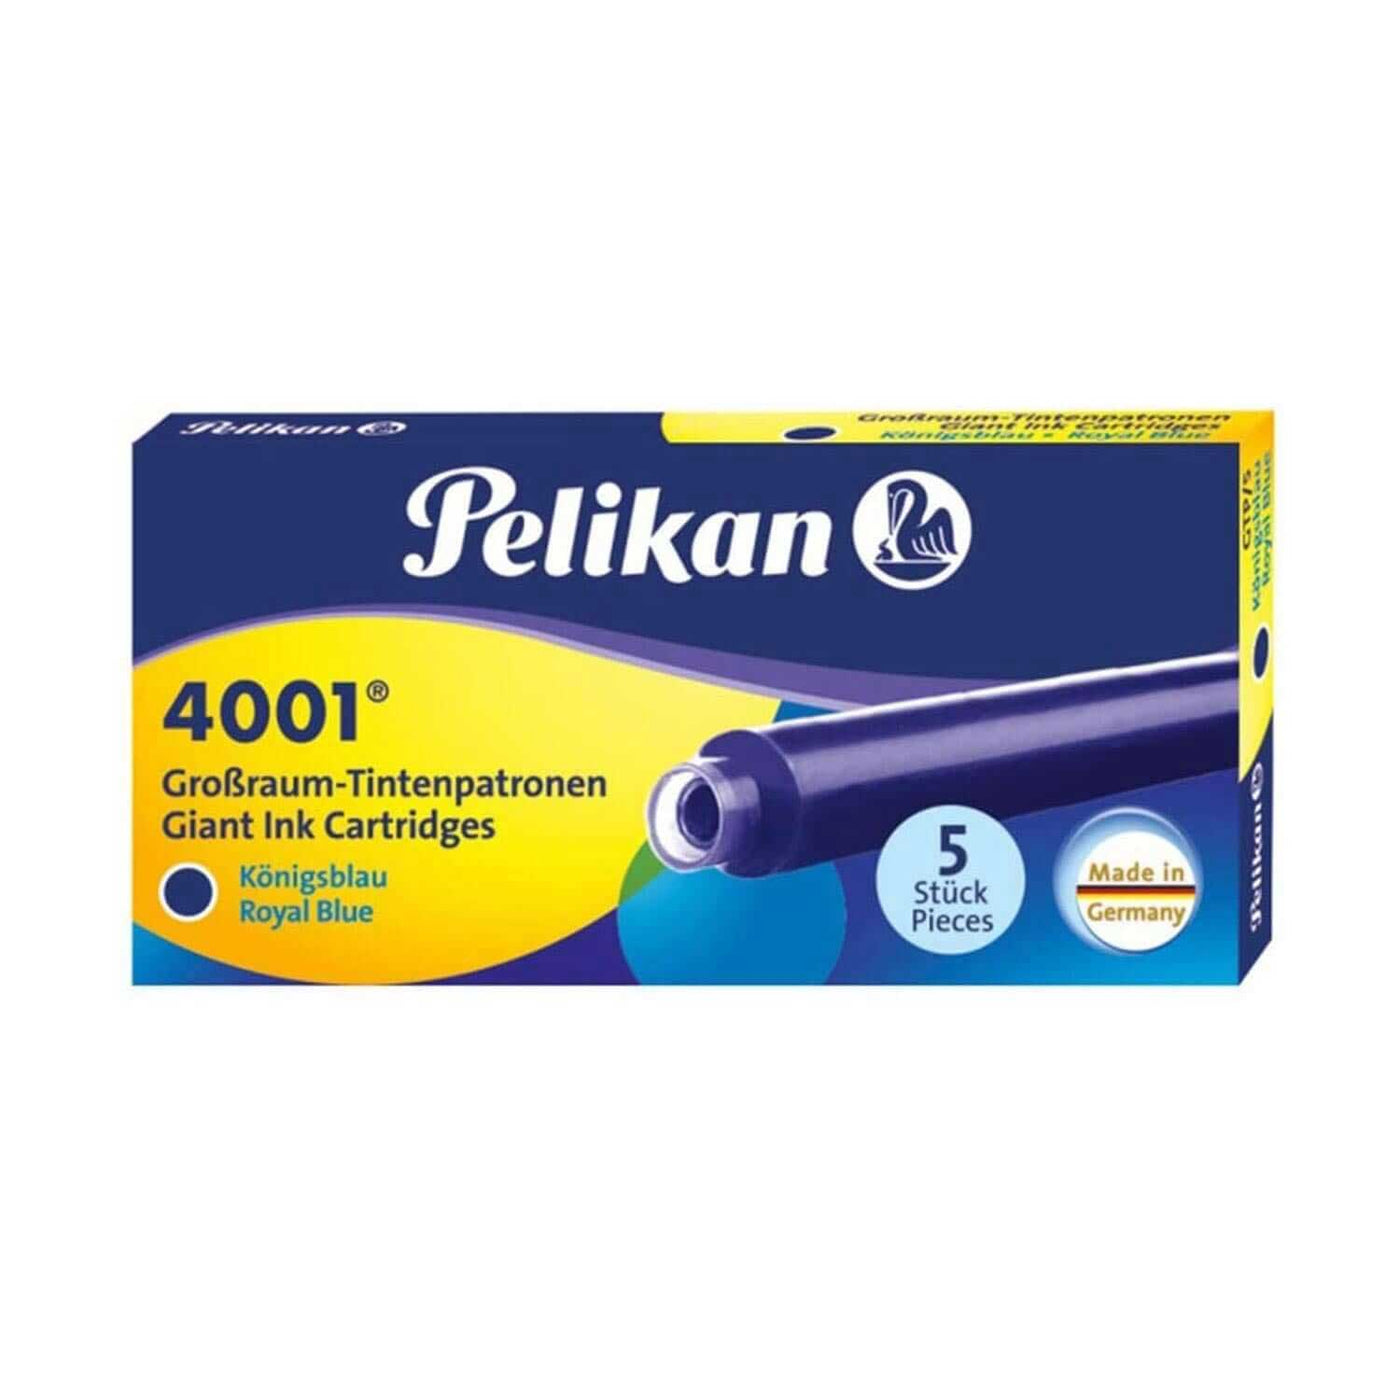 Pelikan 4001 Large Ink Cartridge Pack of 5 - Royal Blue